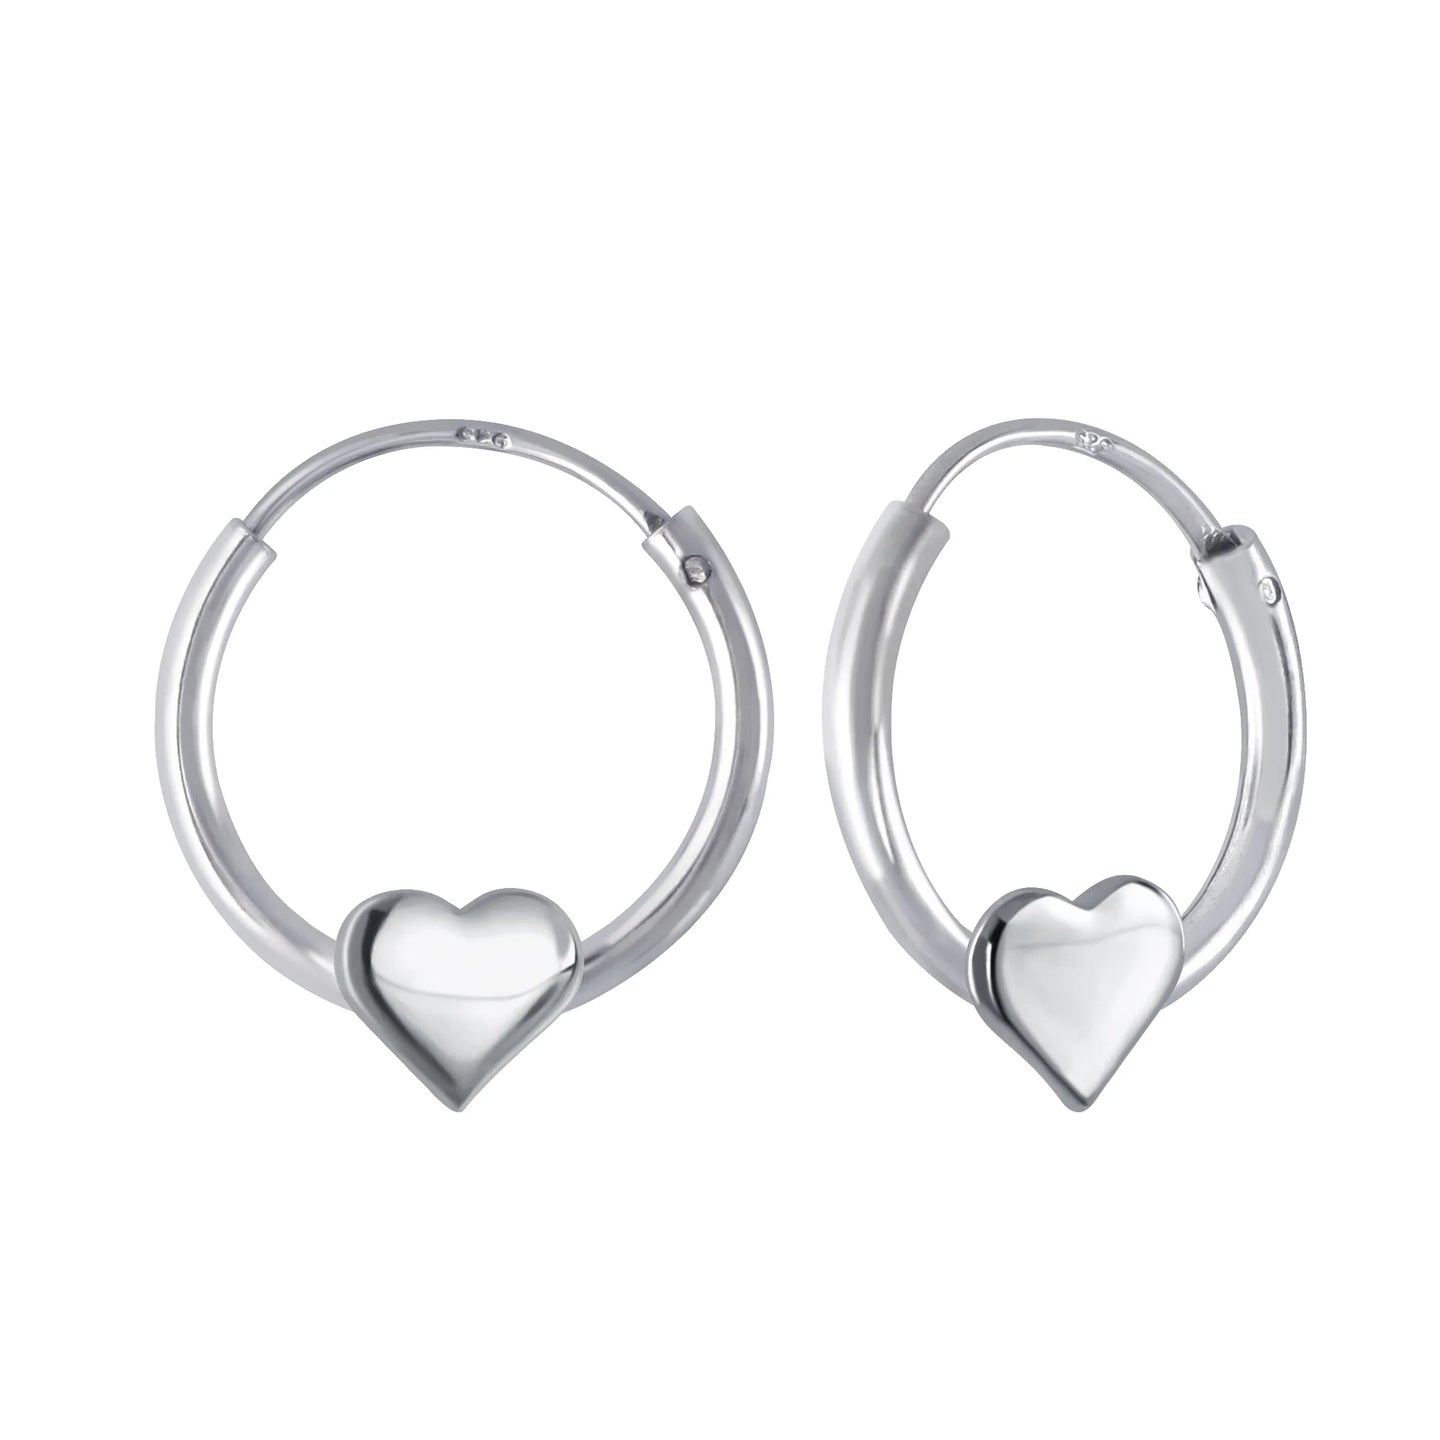 Tomas Endless Love Heart Hoop - Silver-21523